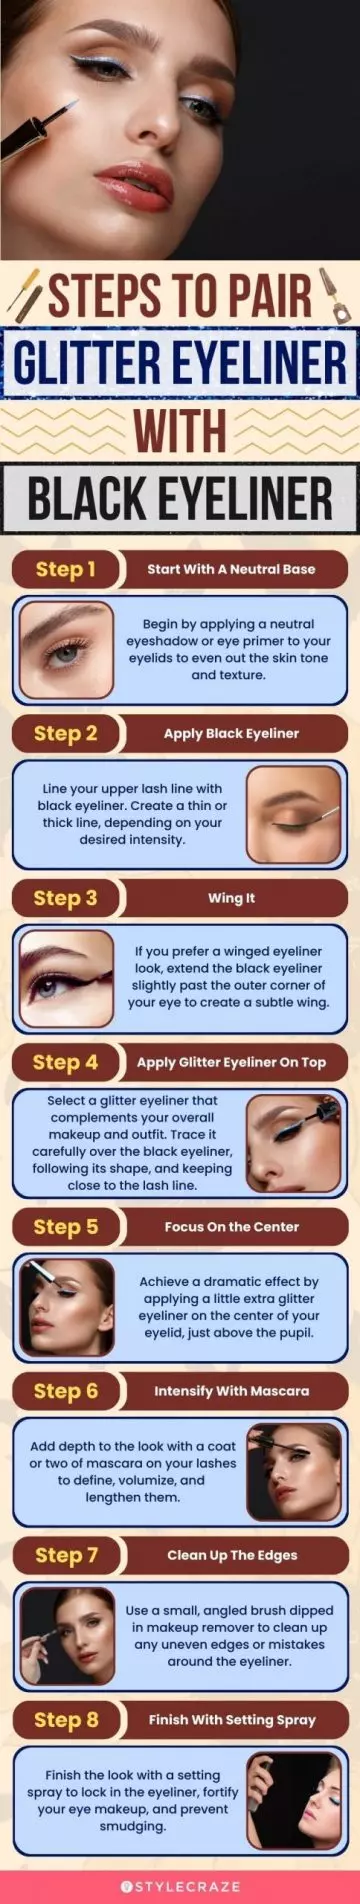 Steps To Pair Glitter Eyeliner With Black Eyeliner (infographic)